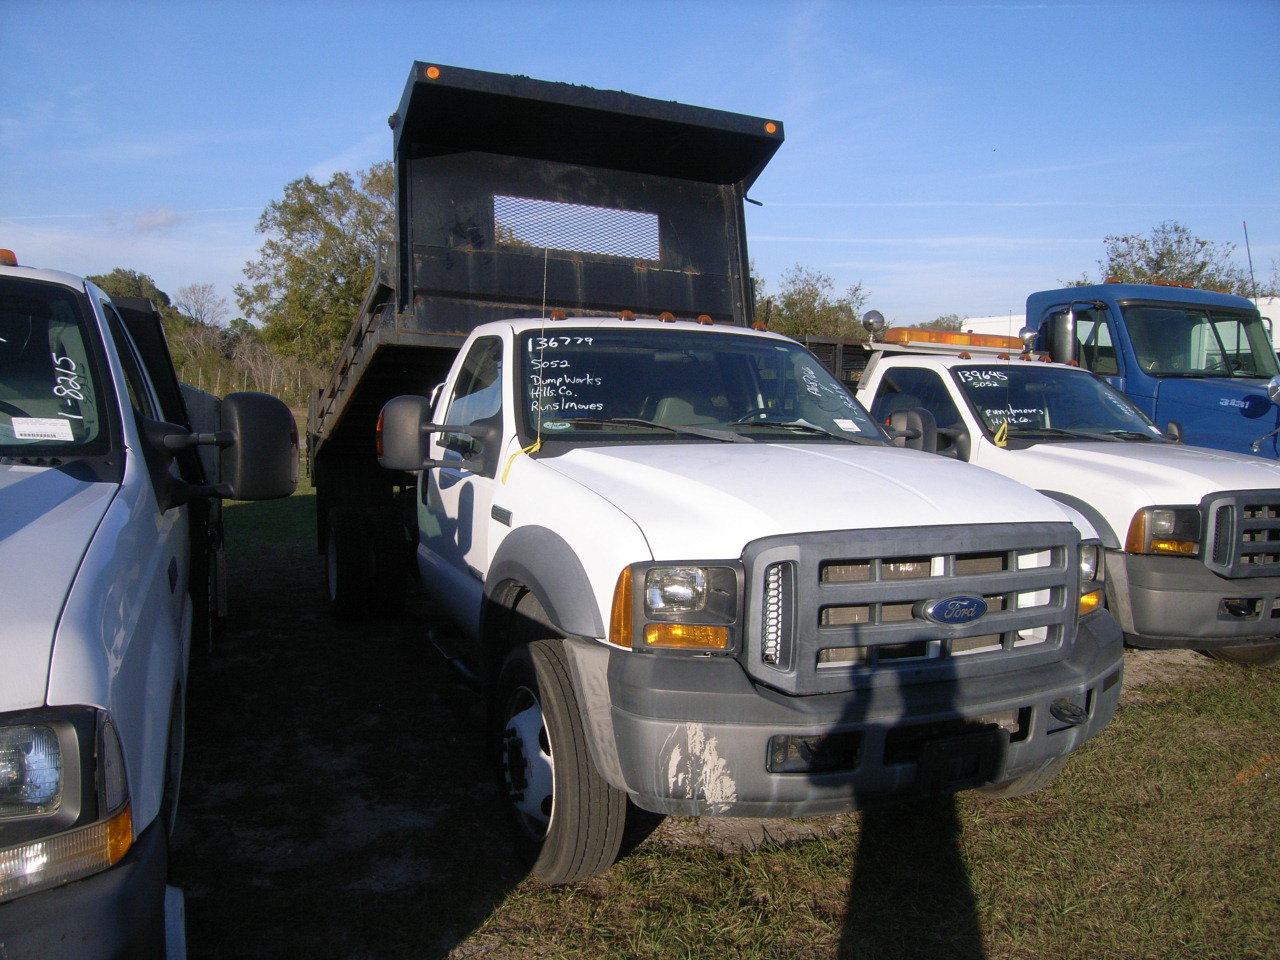 1-08214 (Trucks-Dump)  Seller:Hillsborough County B.O.C.C. 2006 FORD F450